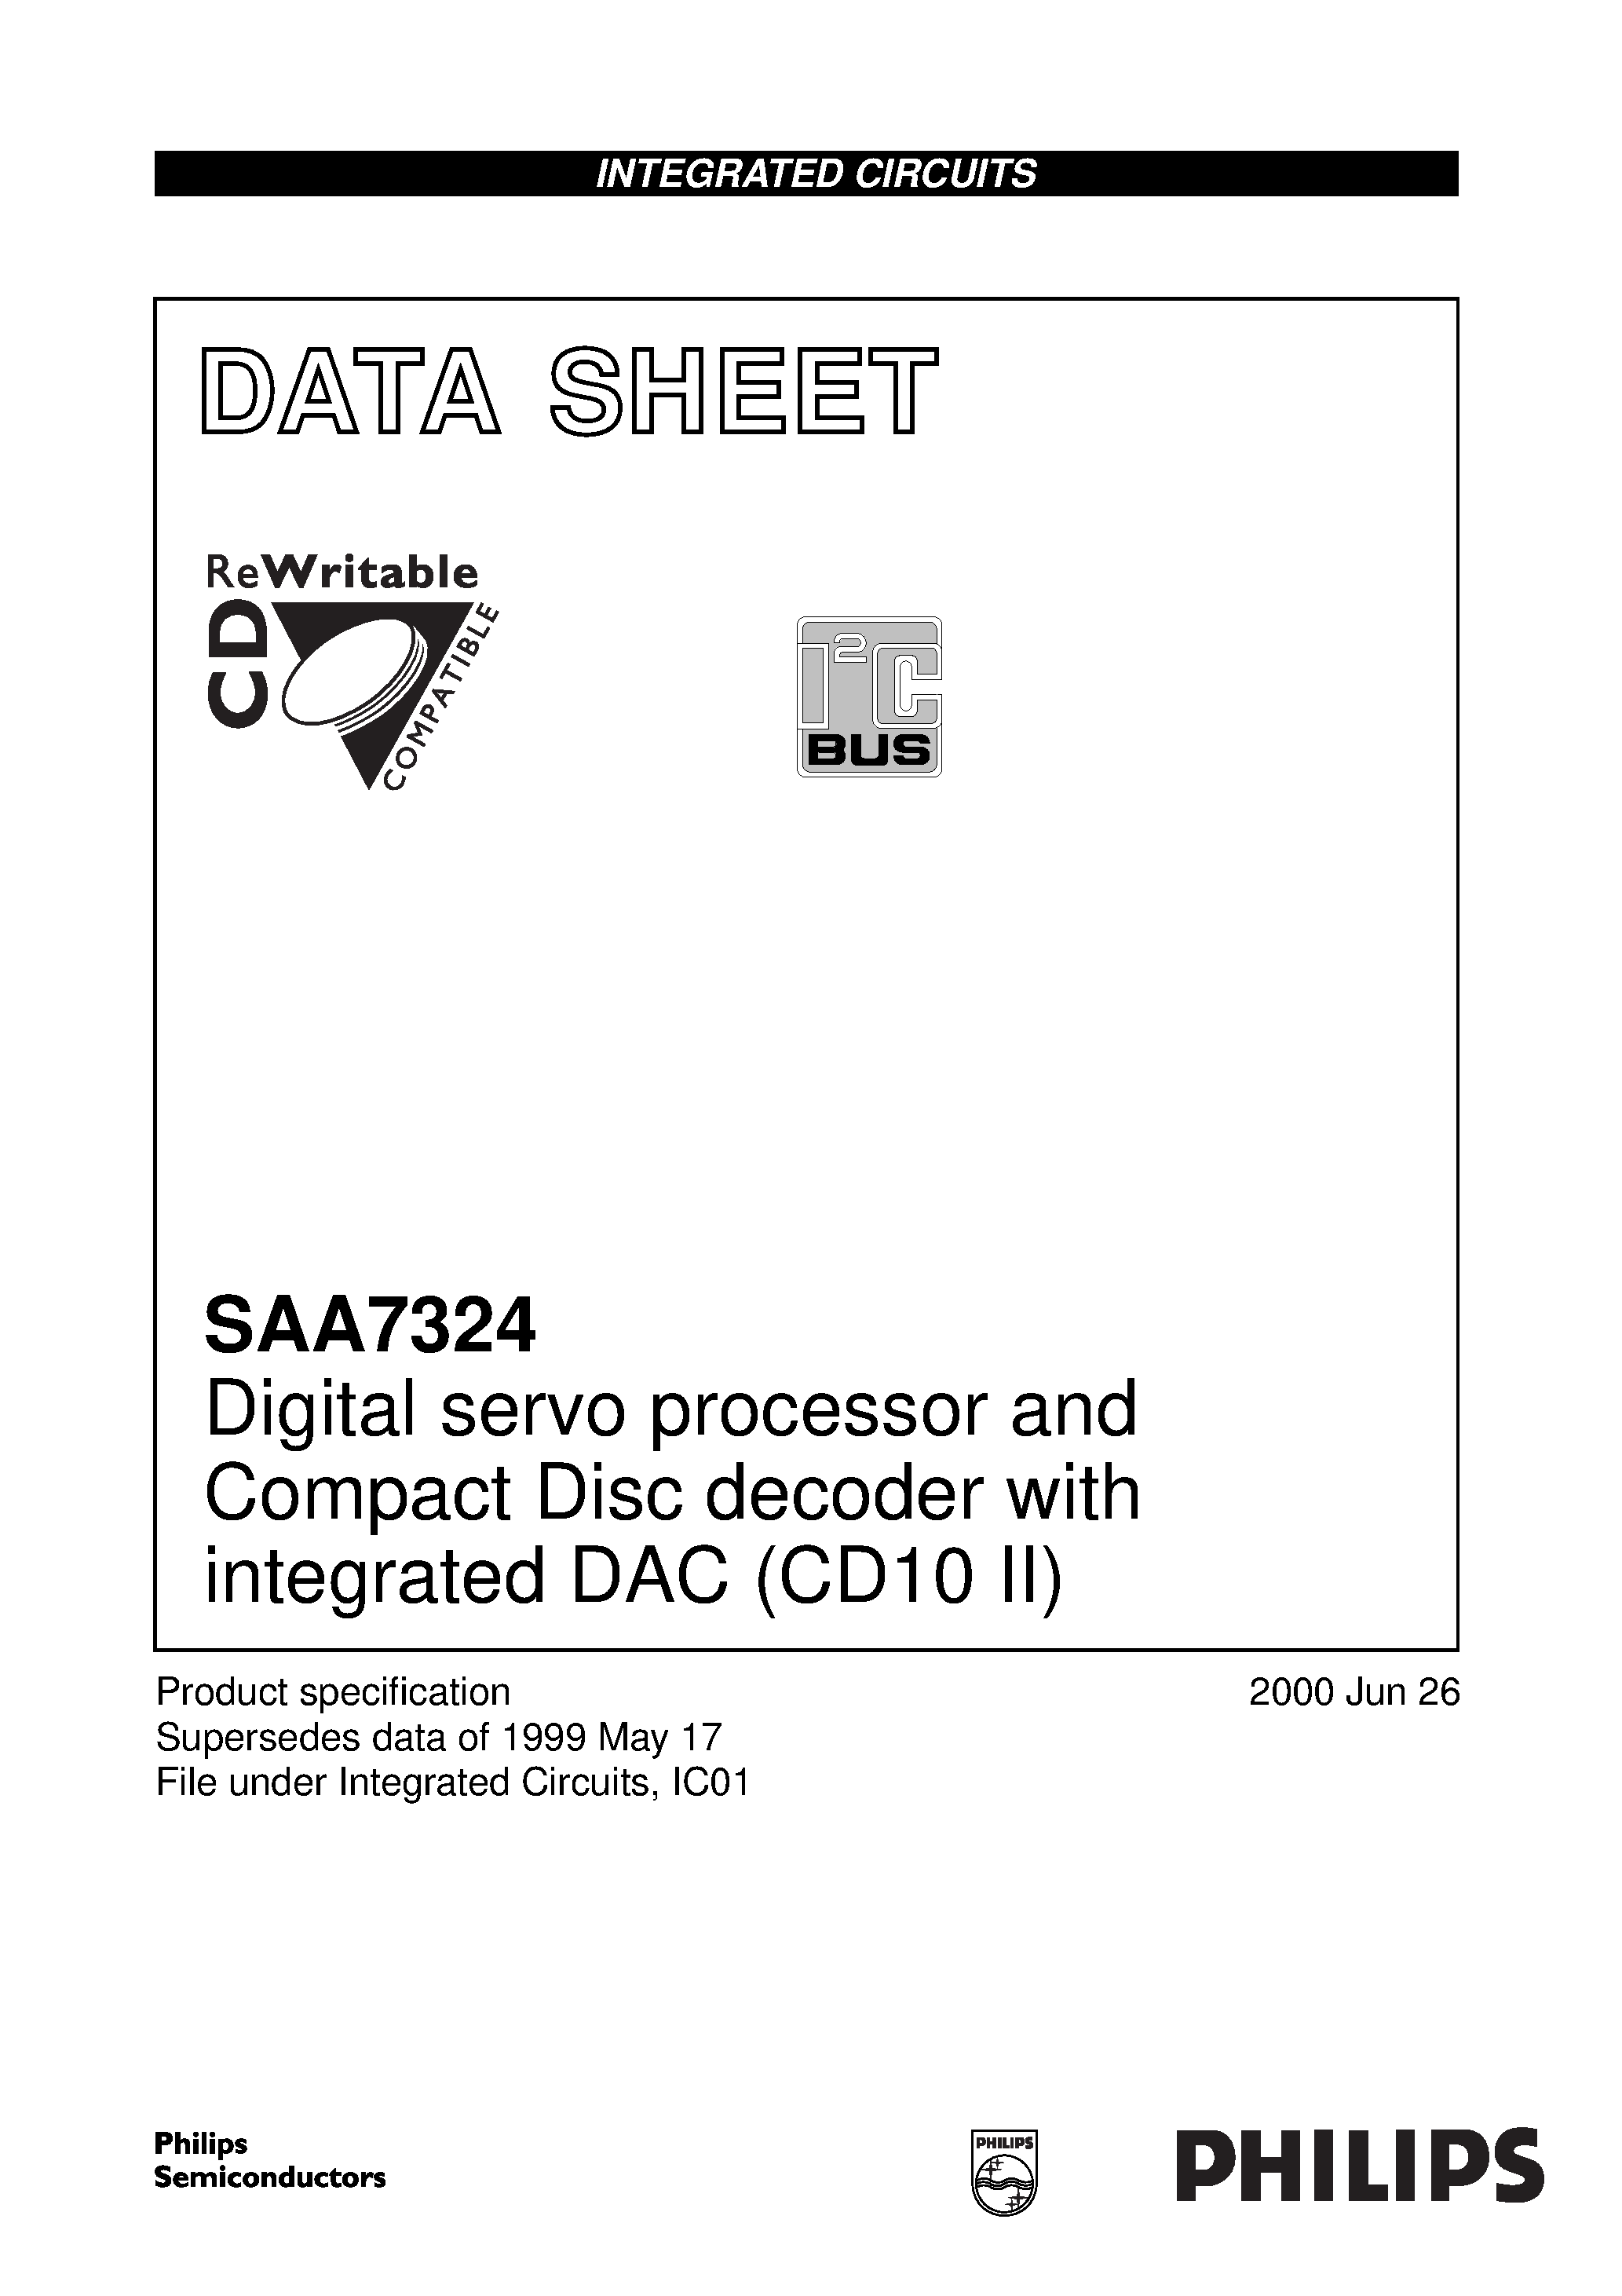 Даташит SAA7324H - Digital servo processor and Compact Disc decoder with integrated DAC CD10 II страница 1